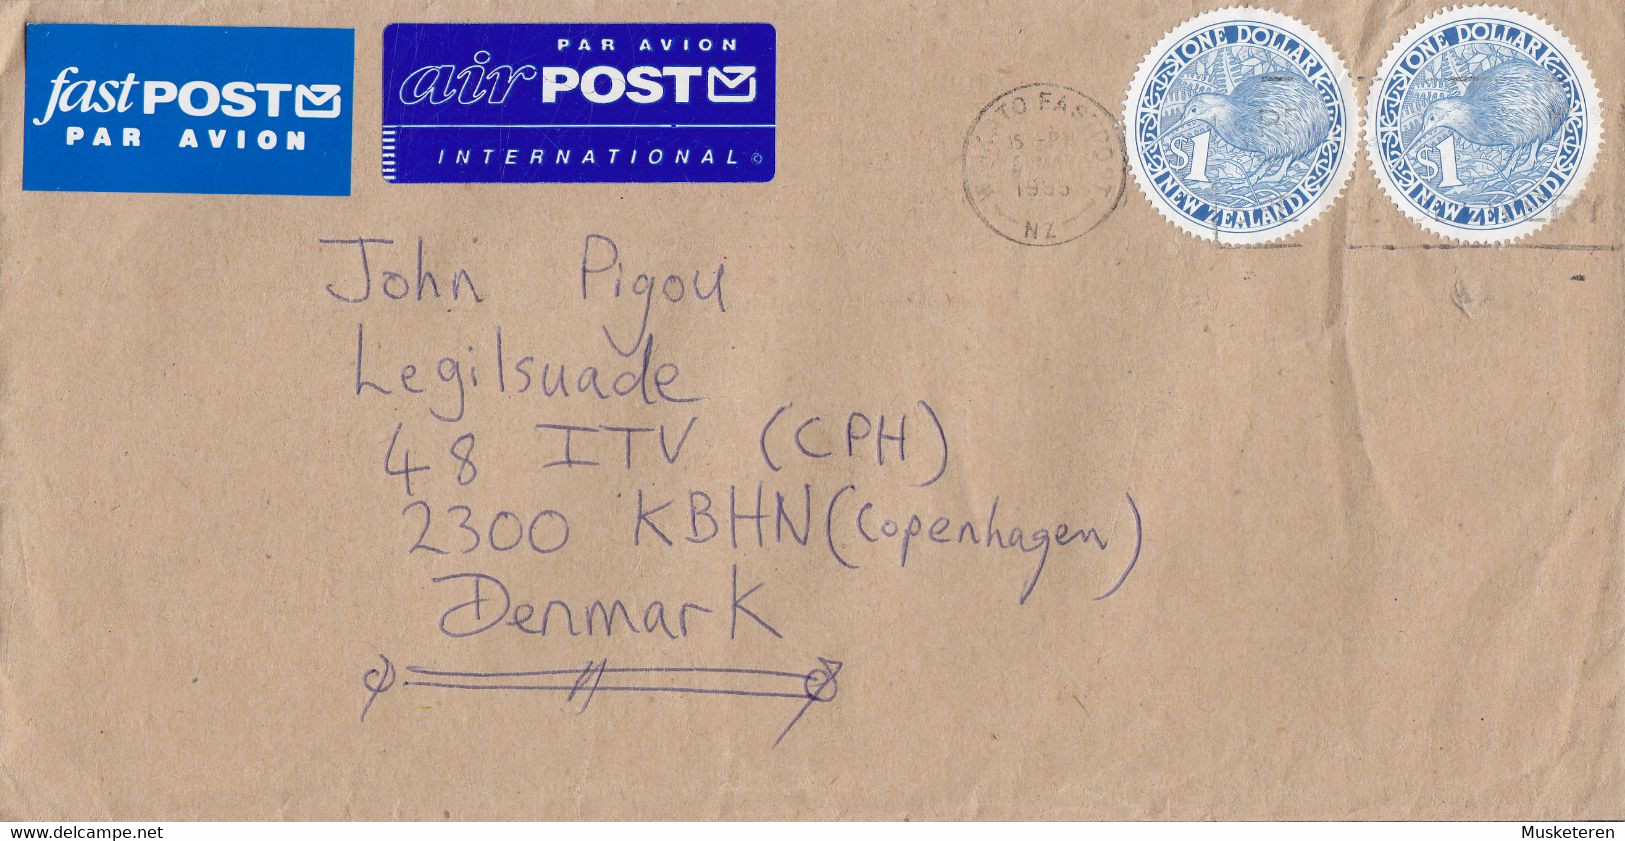 New Zealand AIRPOST & FASTPOST Par Avion Labels WAIKATO 1995 Cover Denmark $1.00 (Round) Kiwi Bird Vogel Oiseau Stamps - Posta Aerea